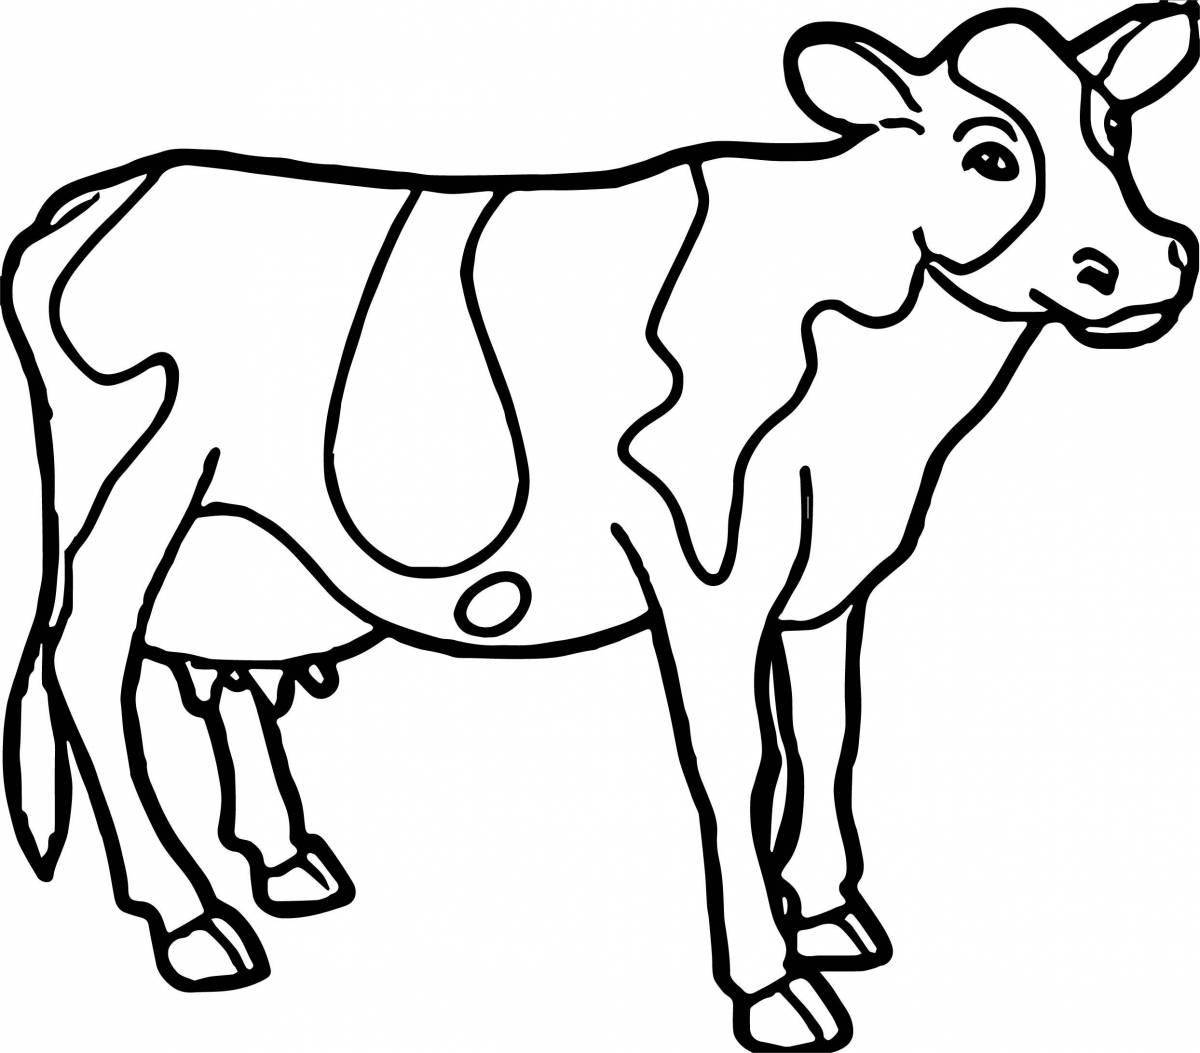 Colouring shiny cow